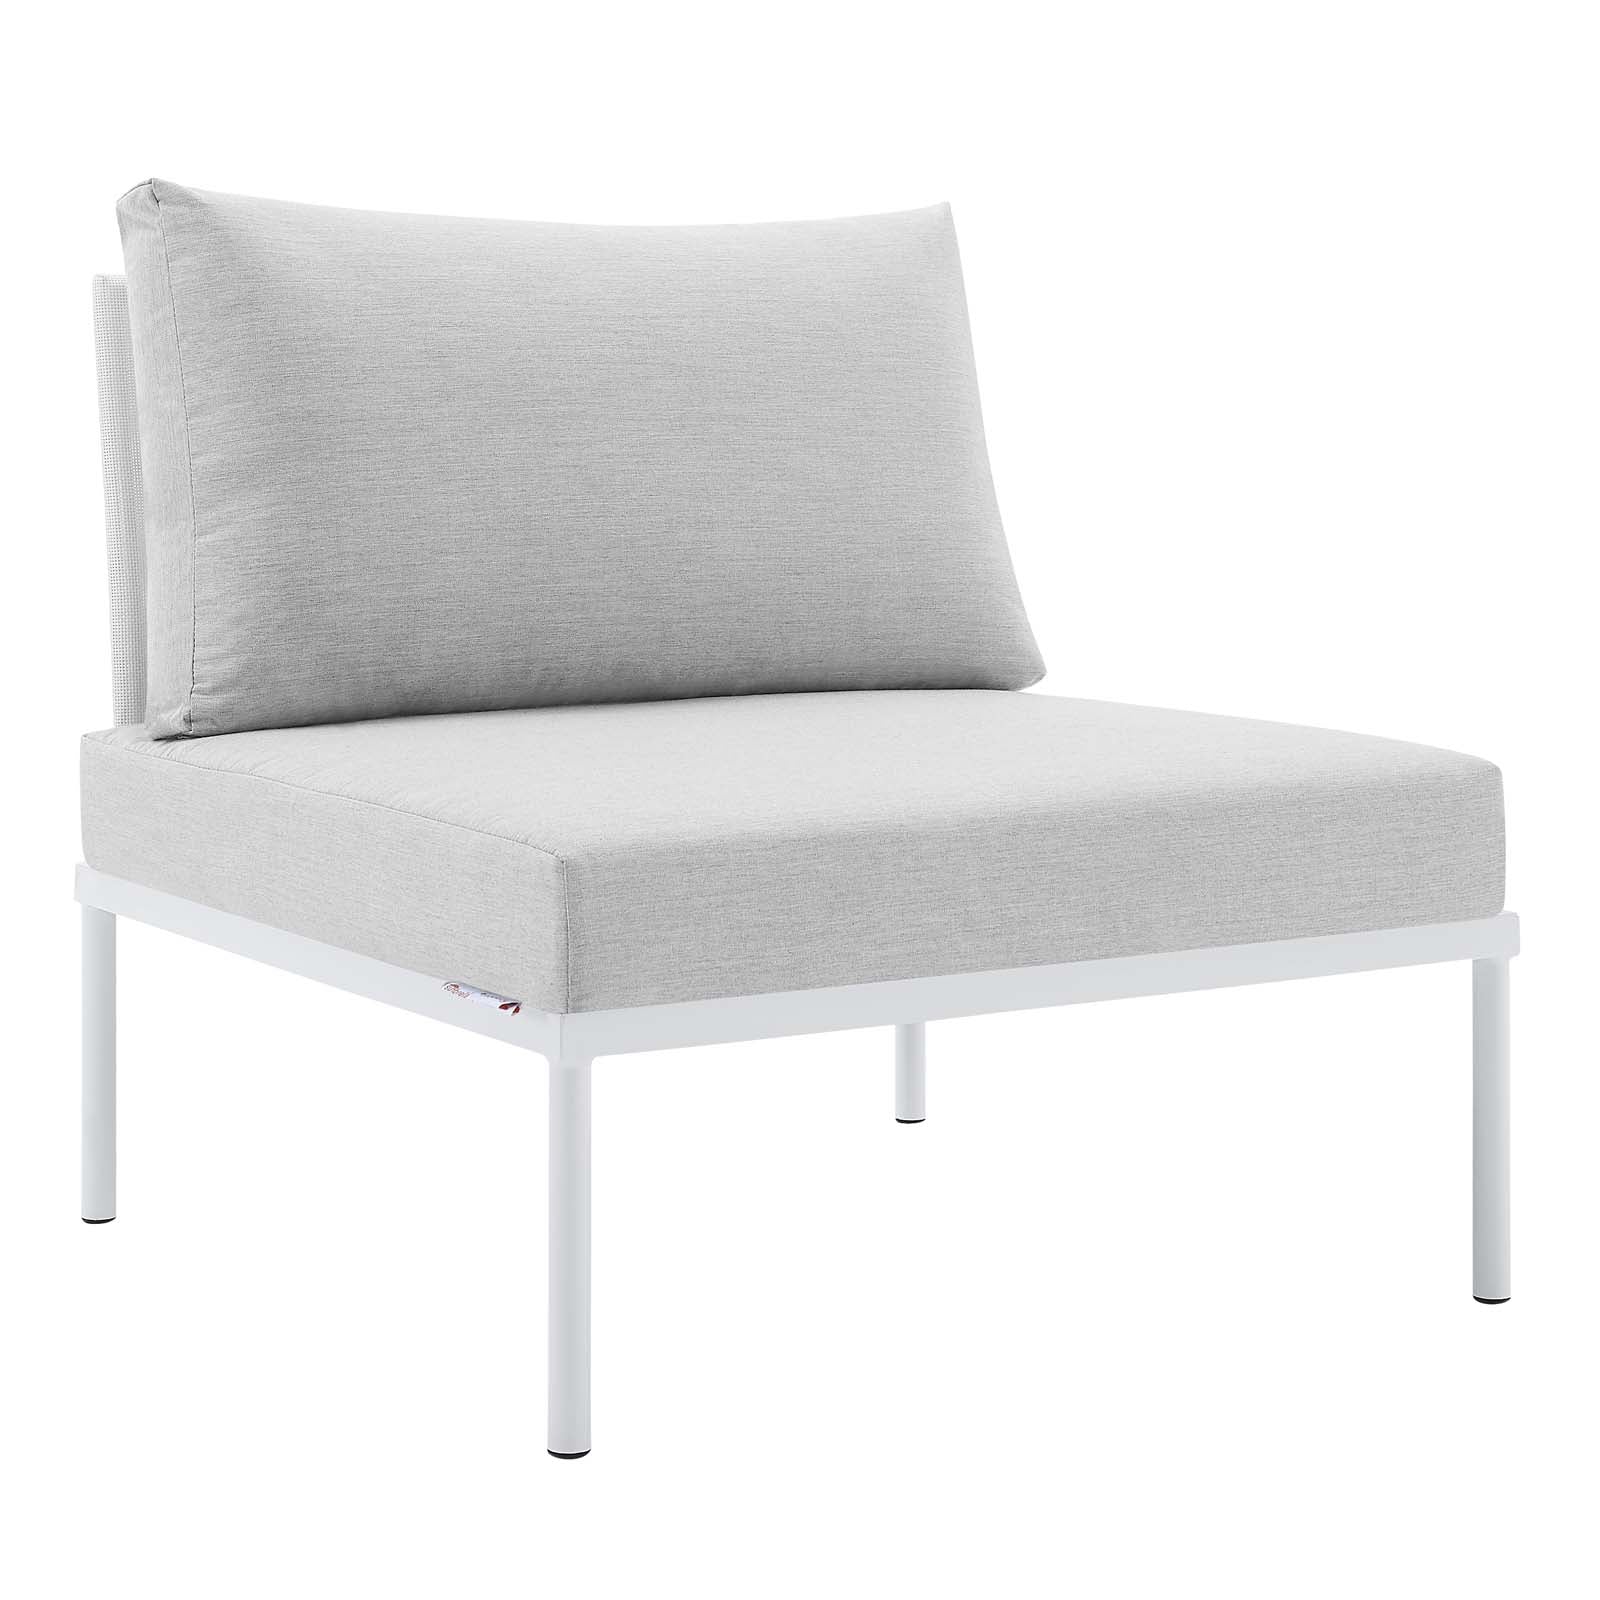 Modway Outdoor Conversation Sets - Harmony 8 Piece Sunbrella Outdoor Patio Aluminum Sectional Sofa Set White Gray